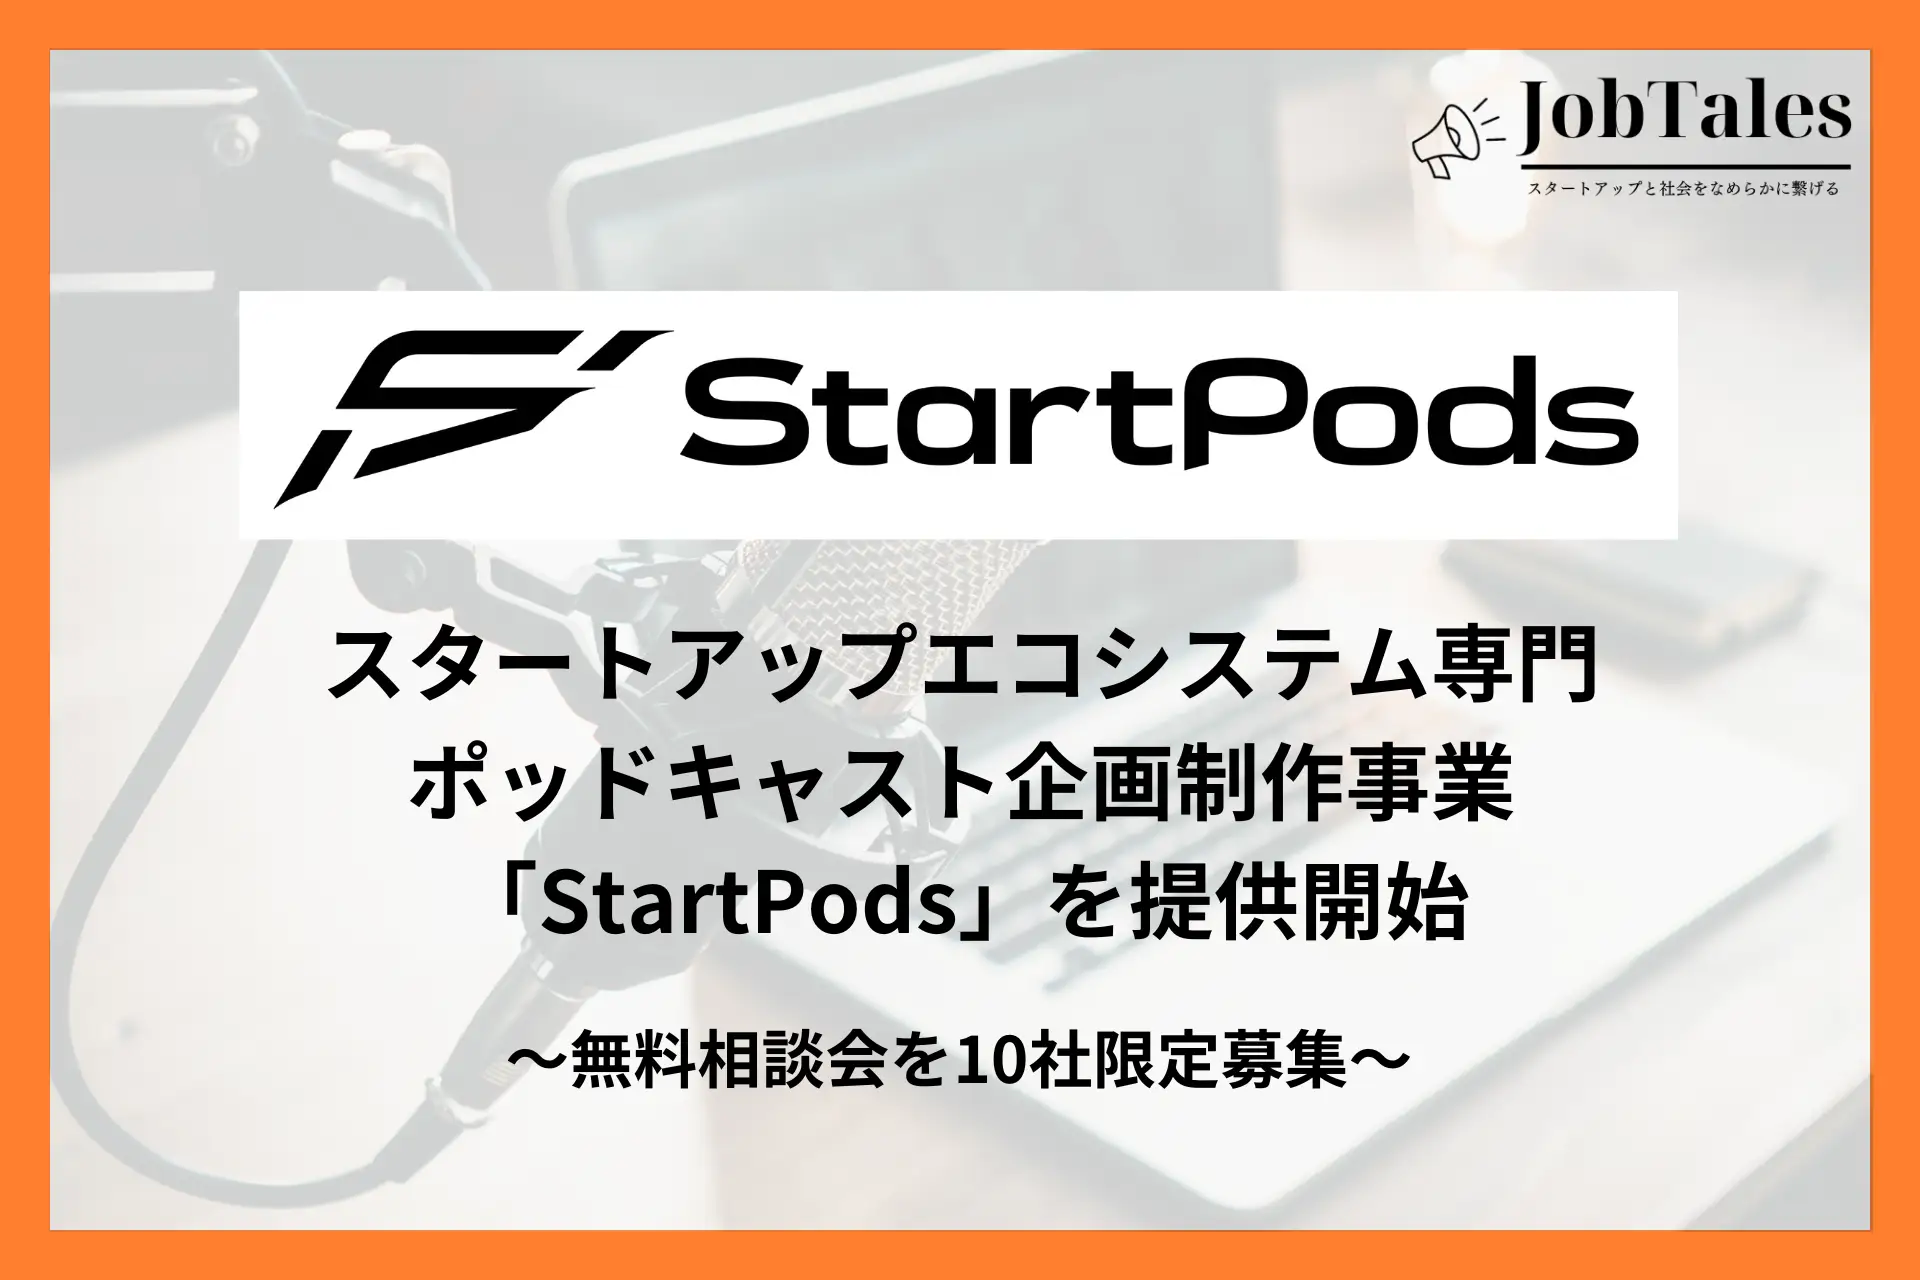 JobTales、スタートアップ企業のポッドキャスト活用を促進する事業「StartPods」を開始